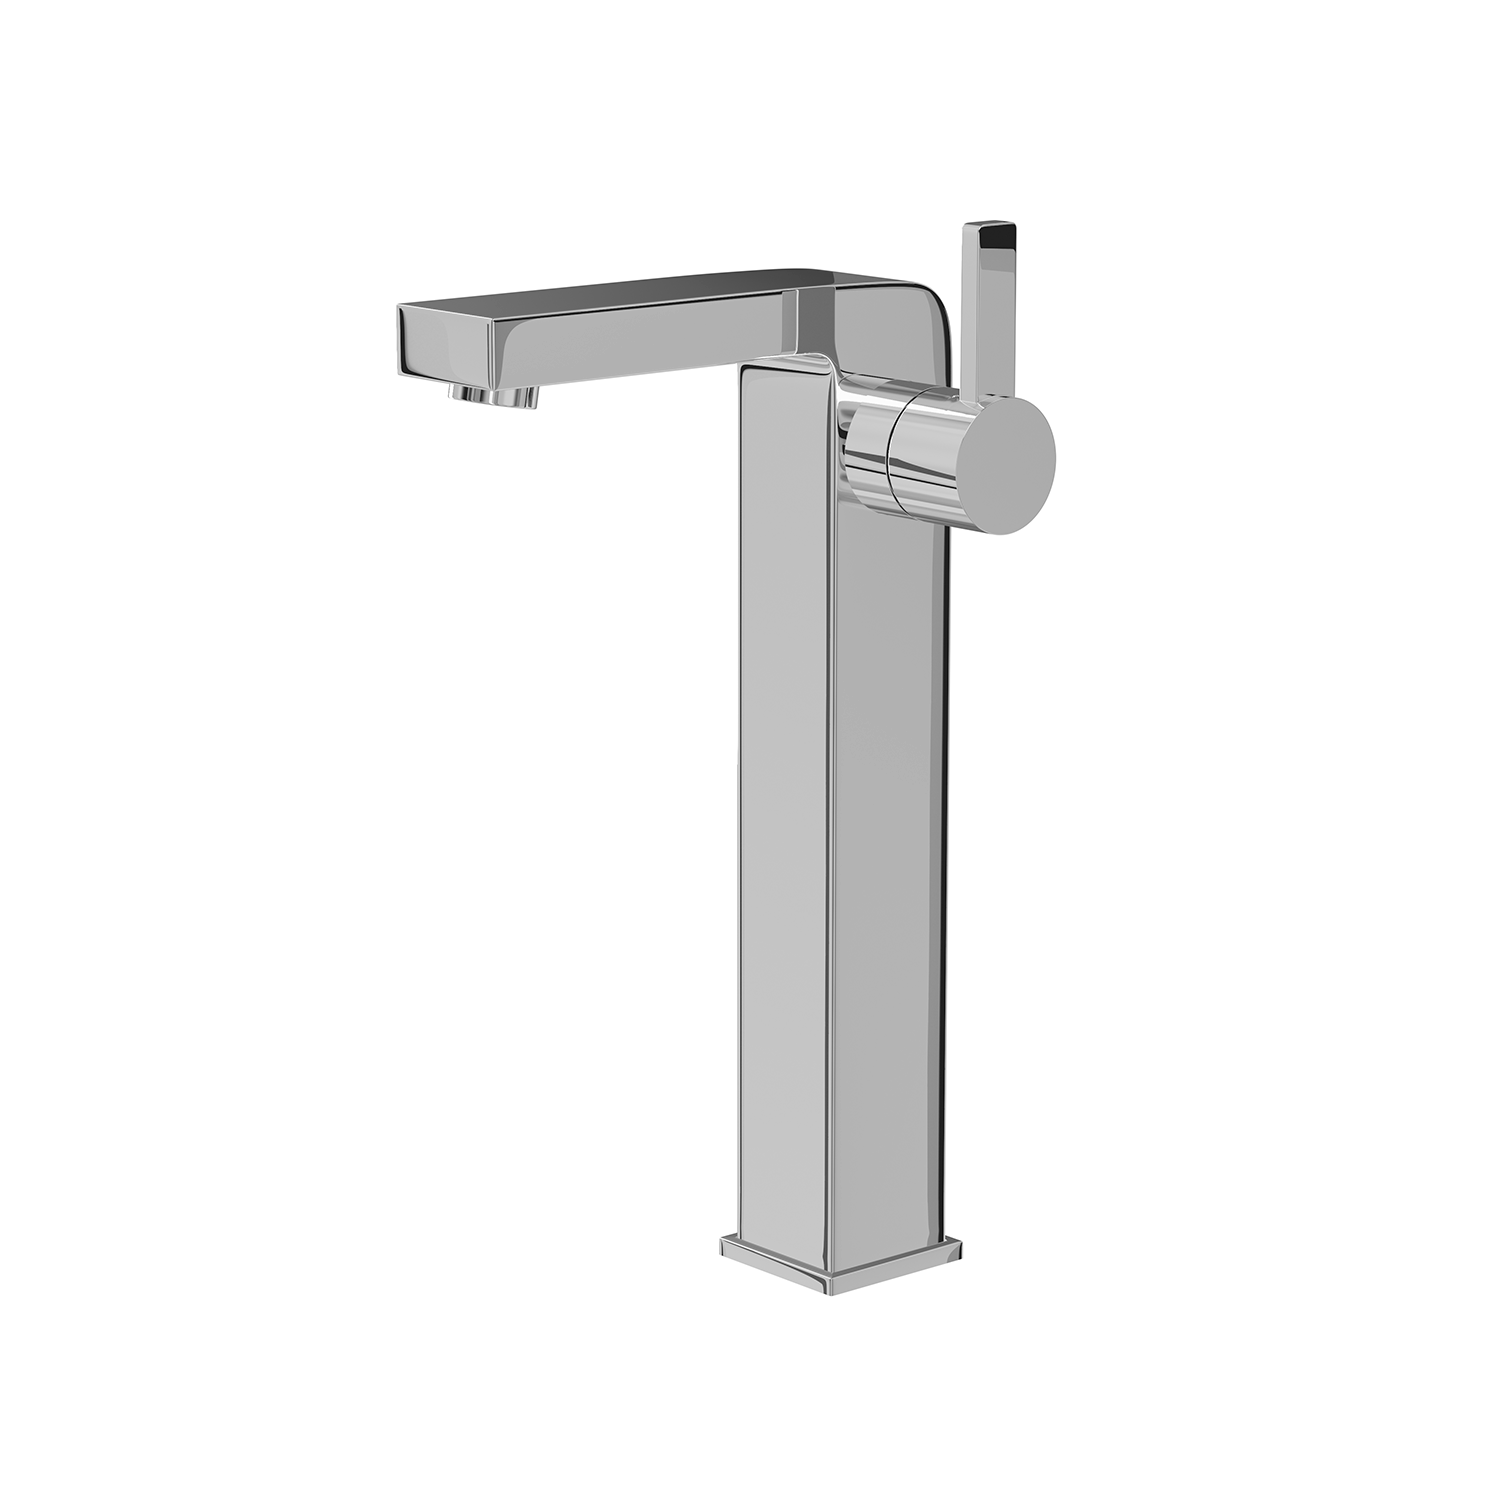 DAX Single Handle Vessel Sink Bathroom Faucet, Brass Body, Chrome Finish, 4-3/4 x 10-1/16 Inches (DAX-8227B)